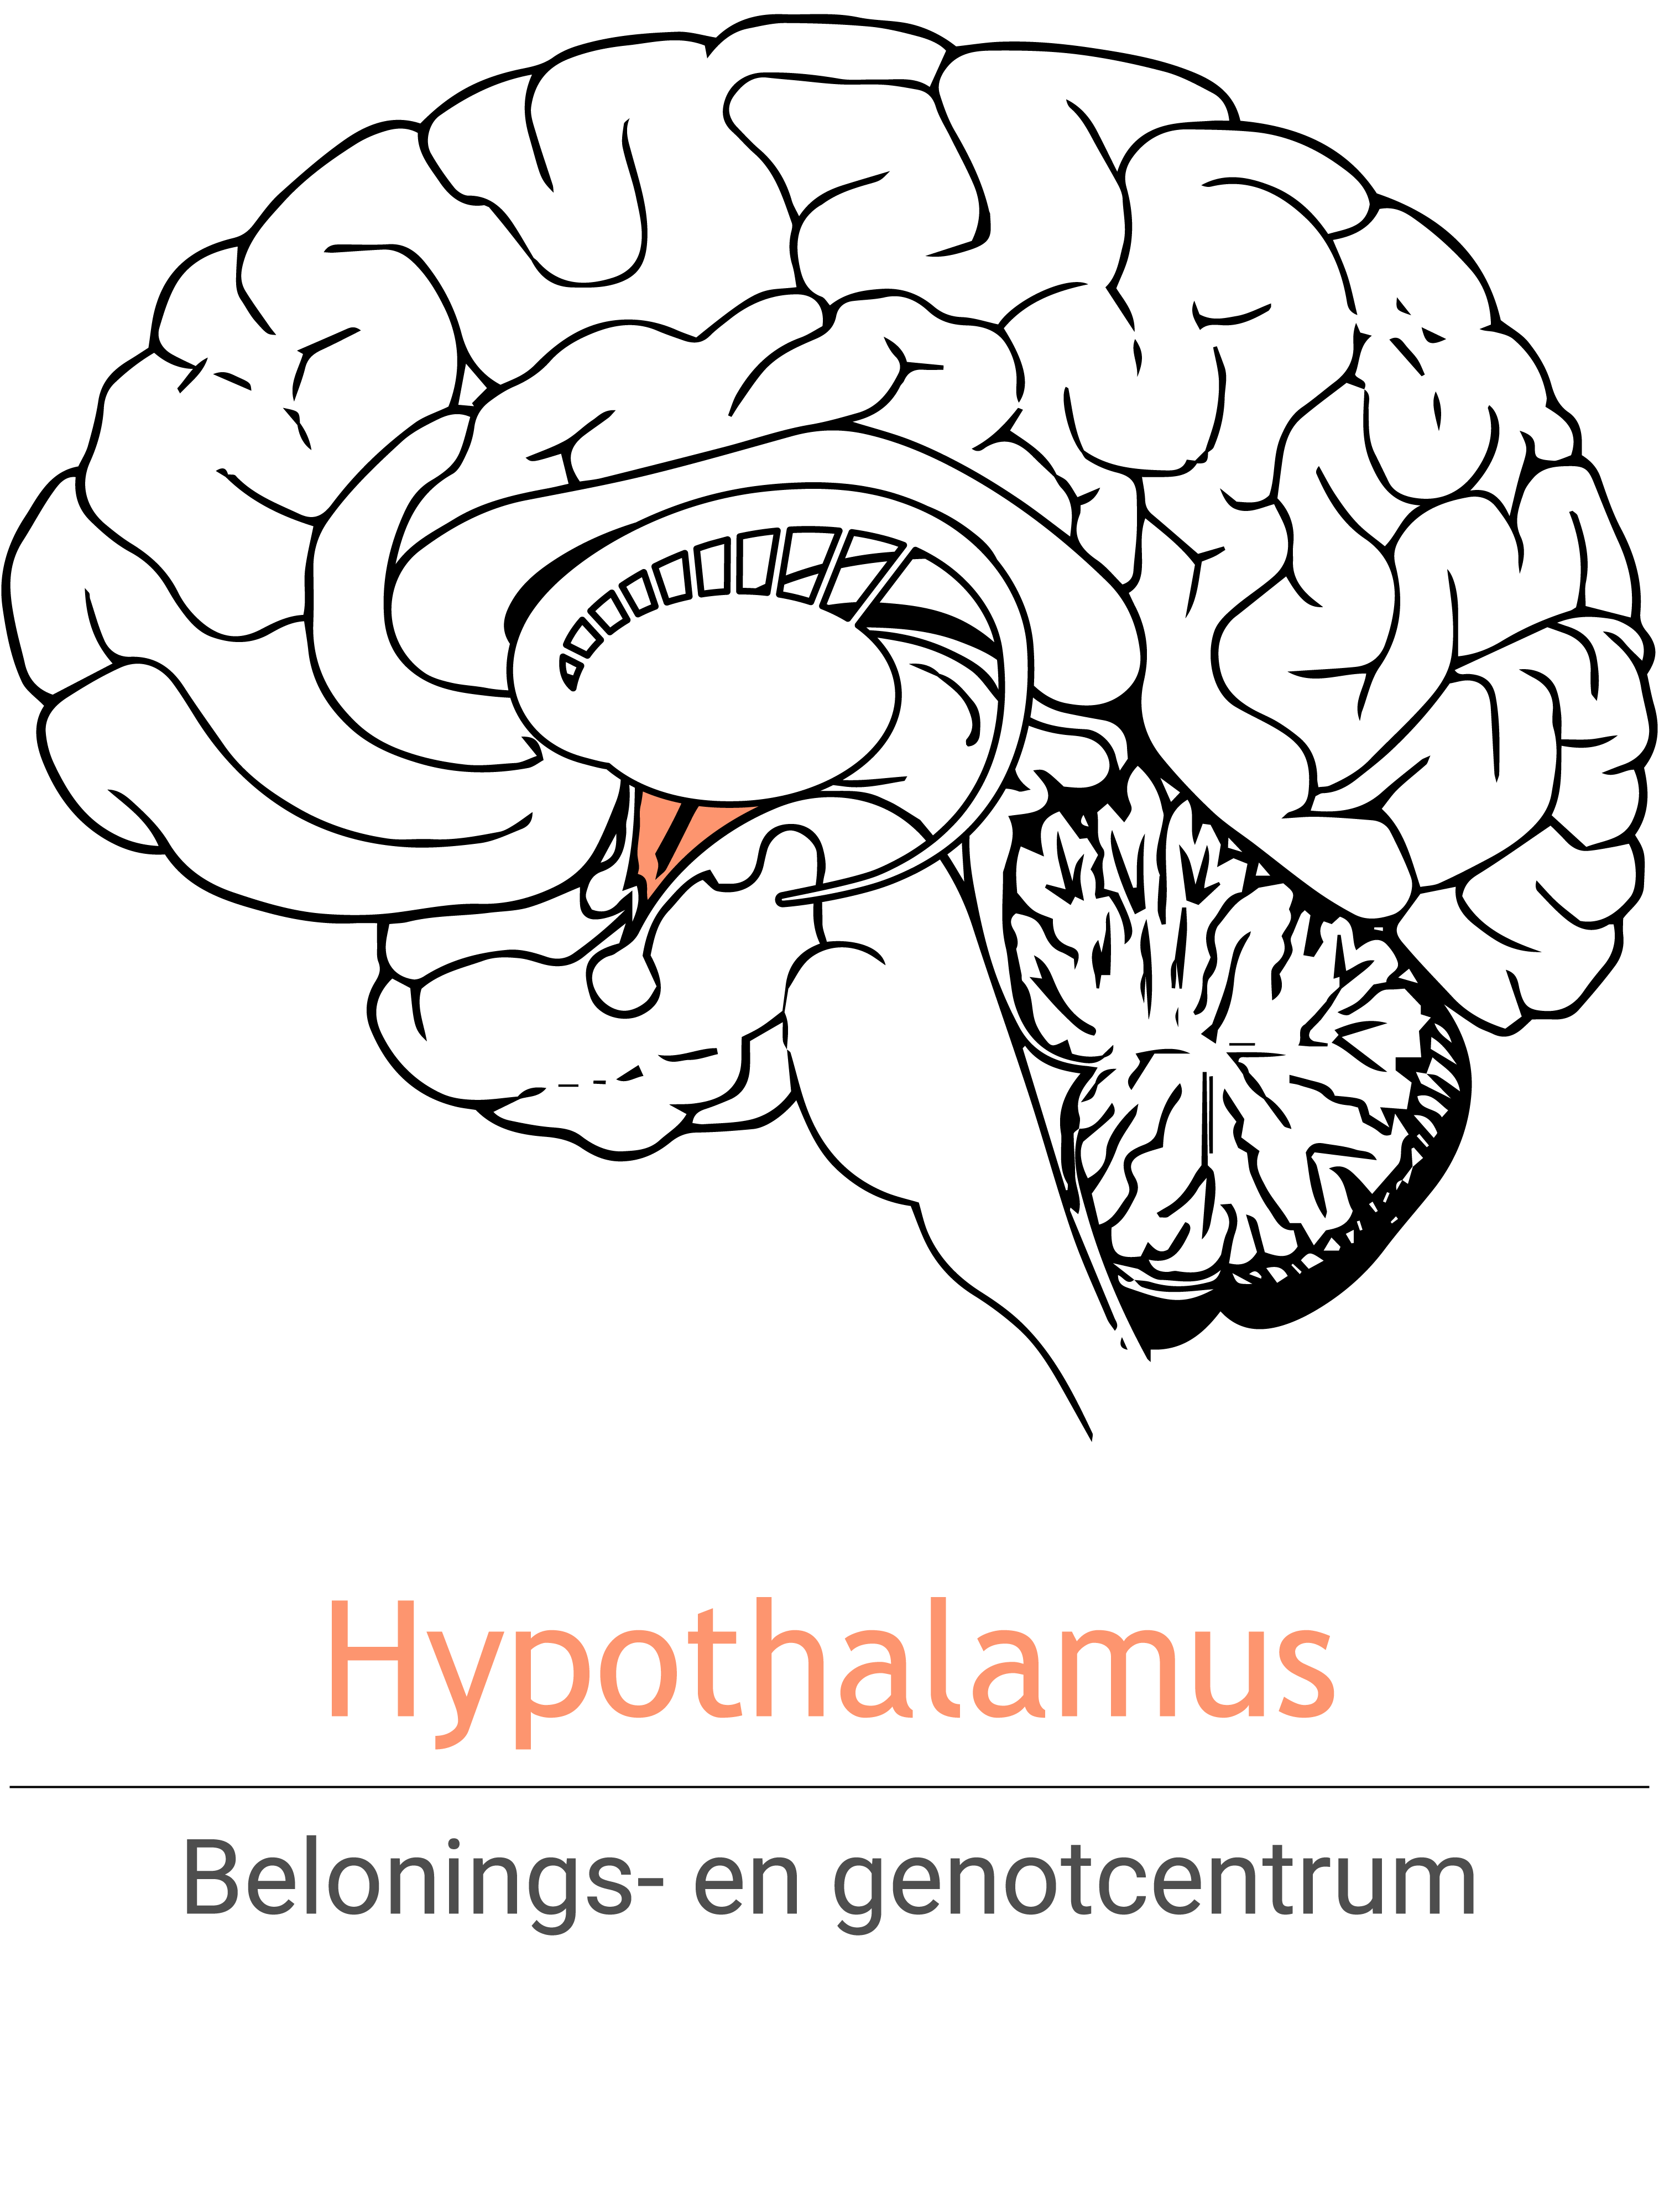 MSH_Hypothalamus_NL